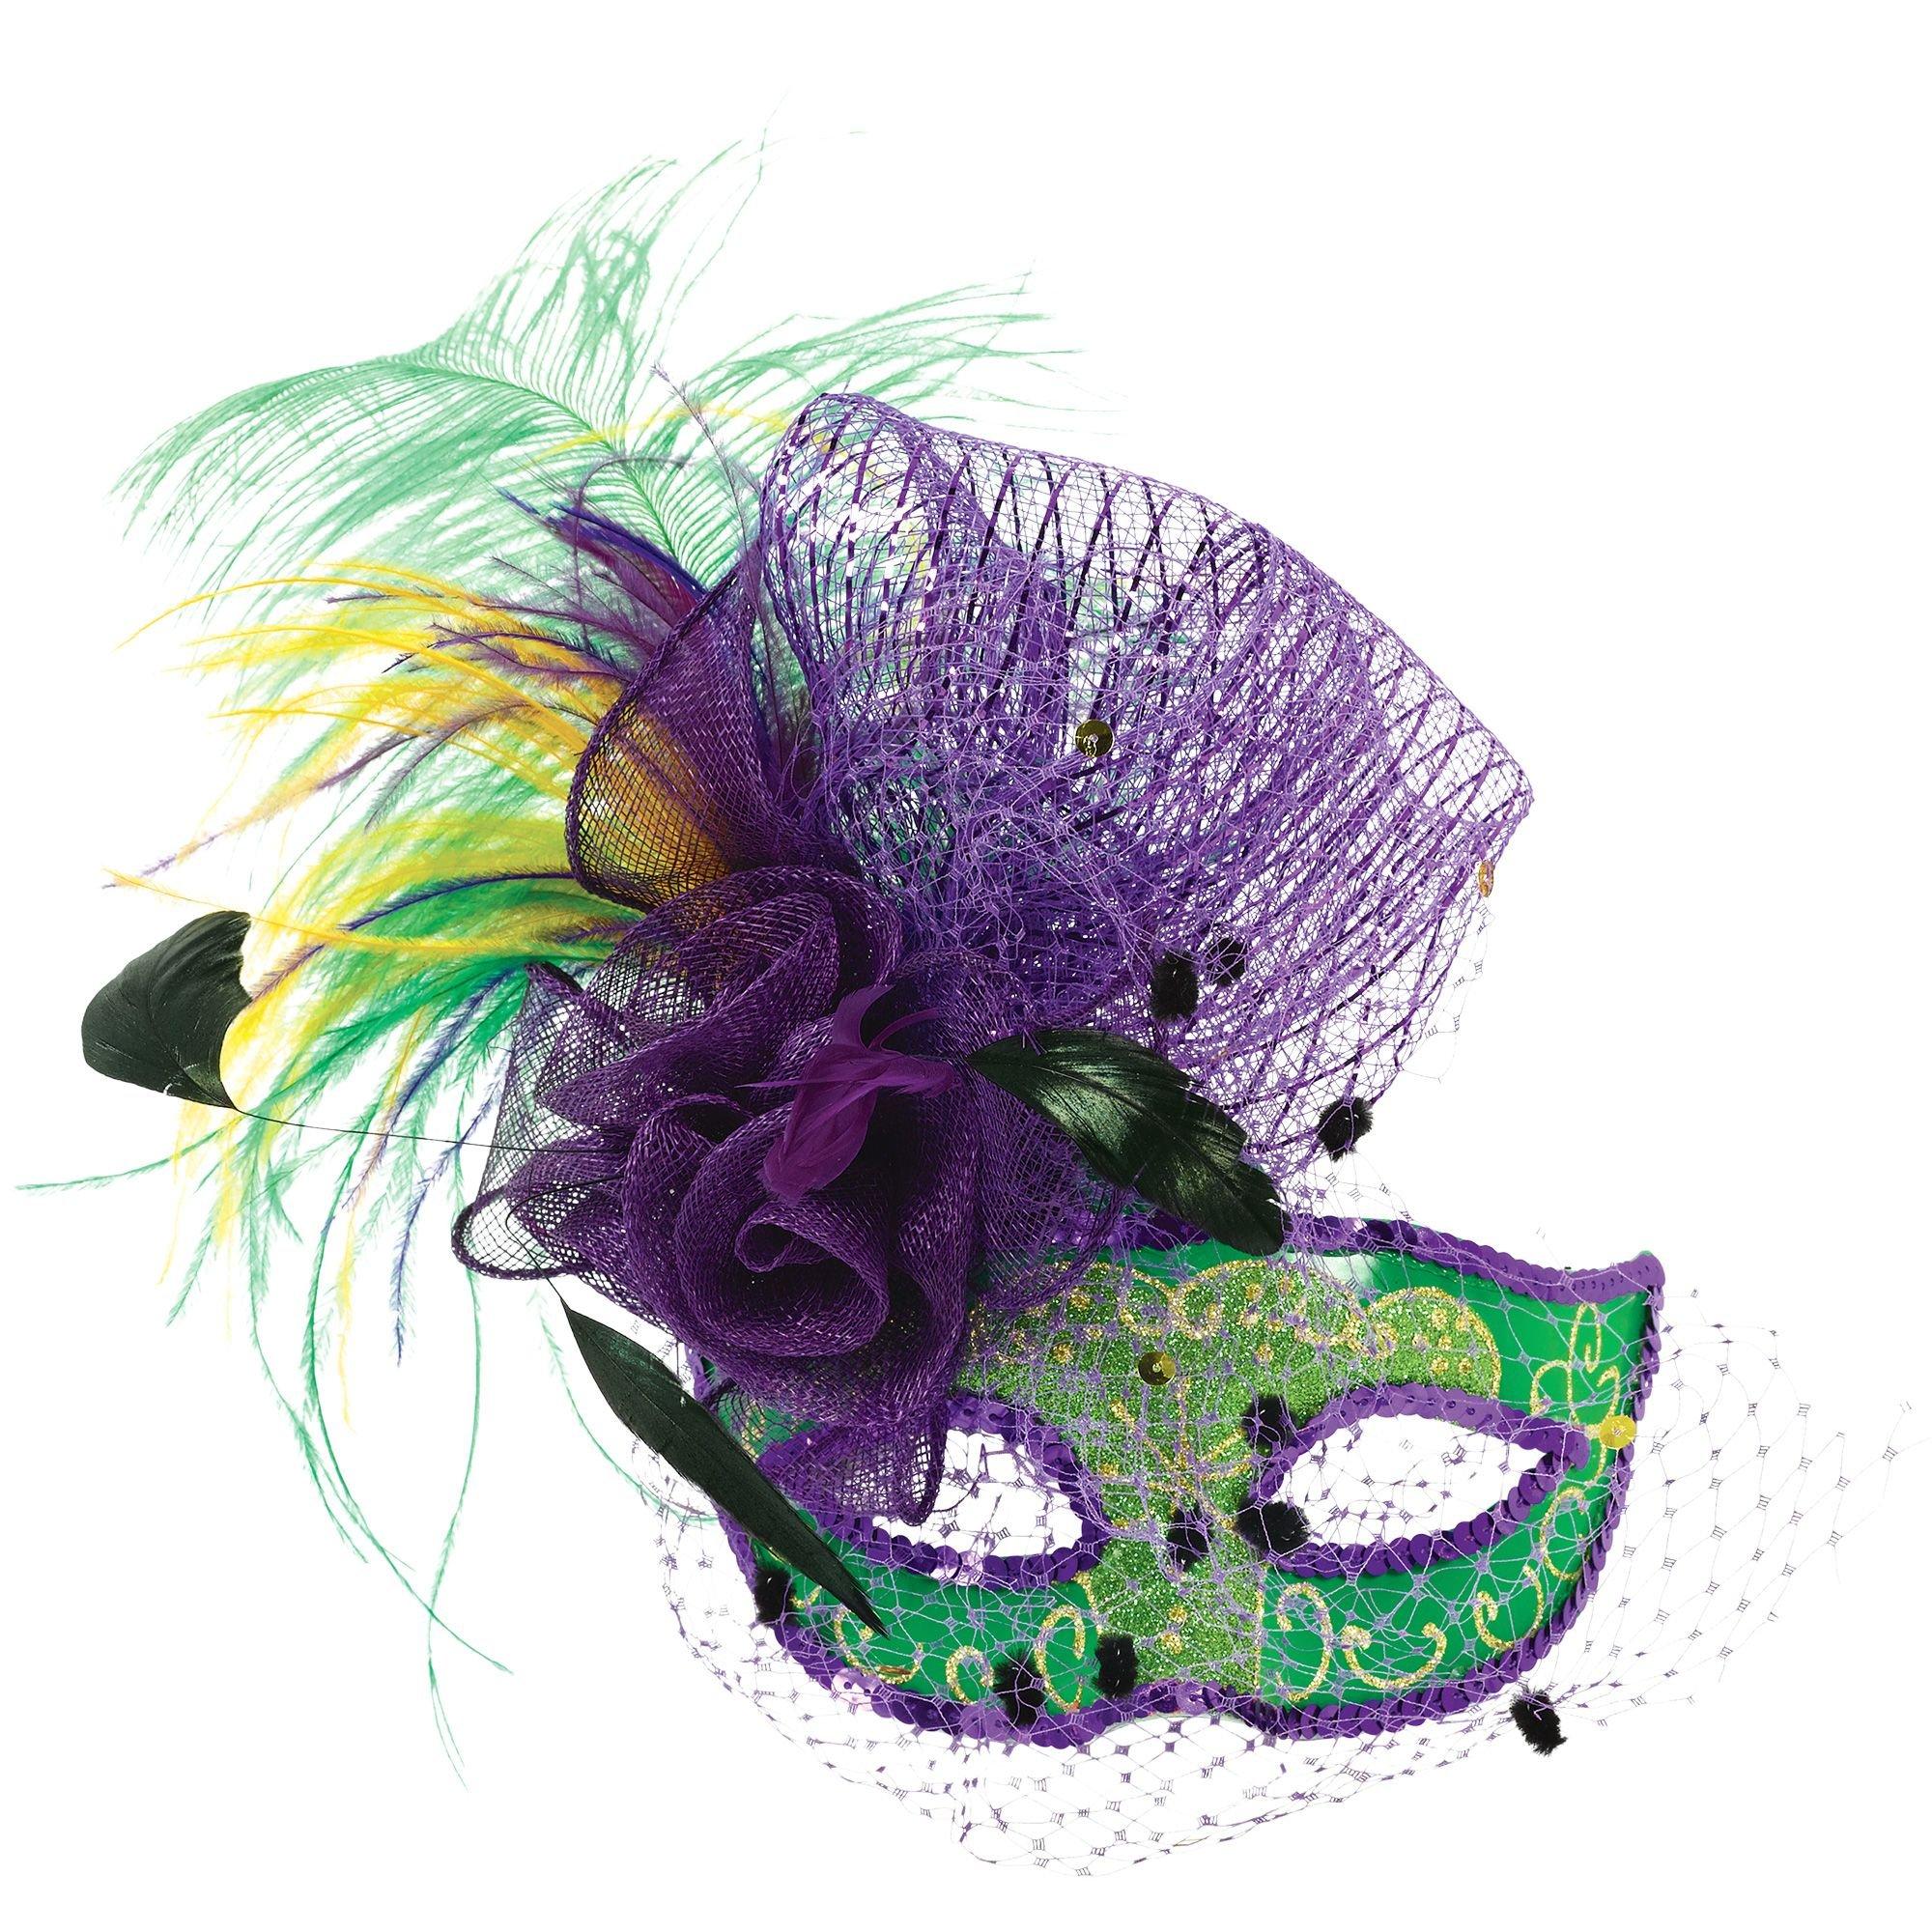 Elegance Mask Mardi Gras Masks in Mardi Gras Party Supplies